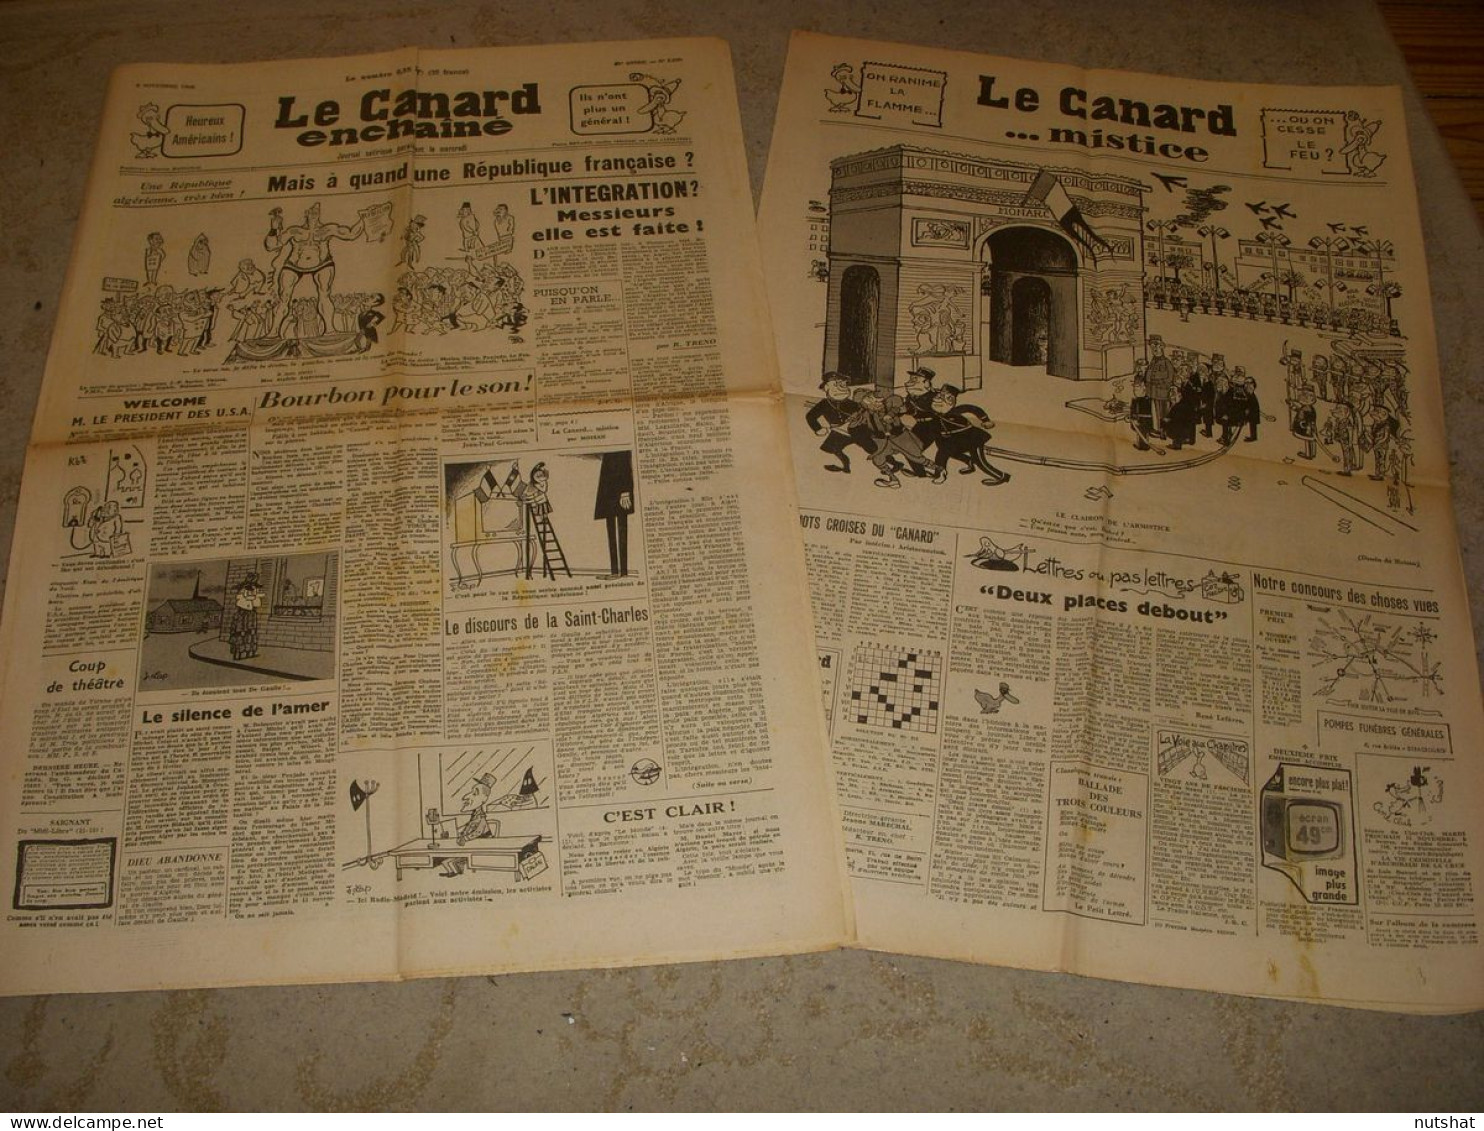 CANARD ENCHAINE 2090 09.11.1960 Pierre SABBAGH THEATRE RUY BLAS Louis MOLLION - Politica